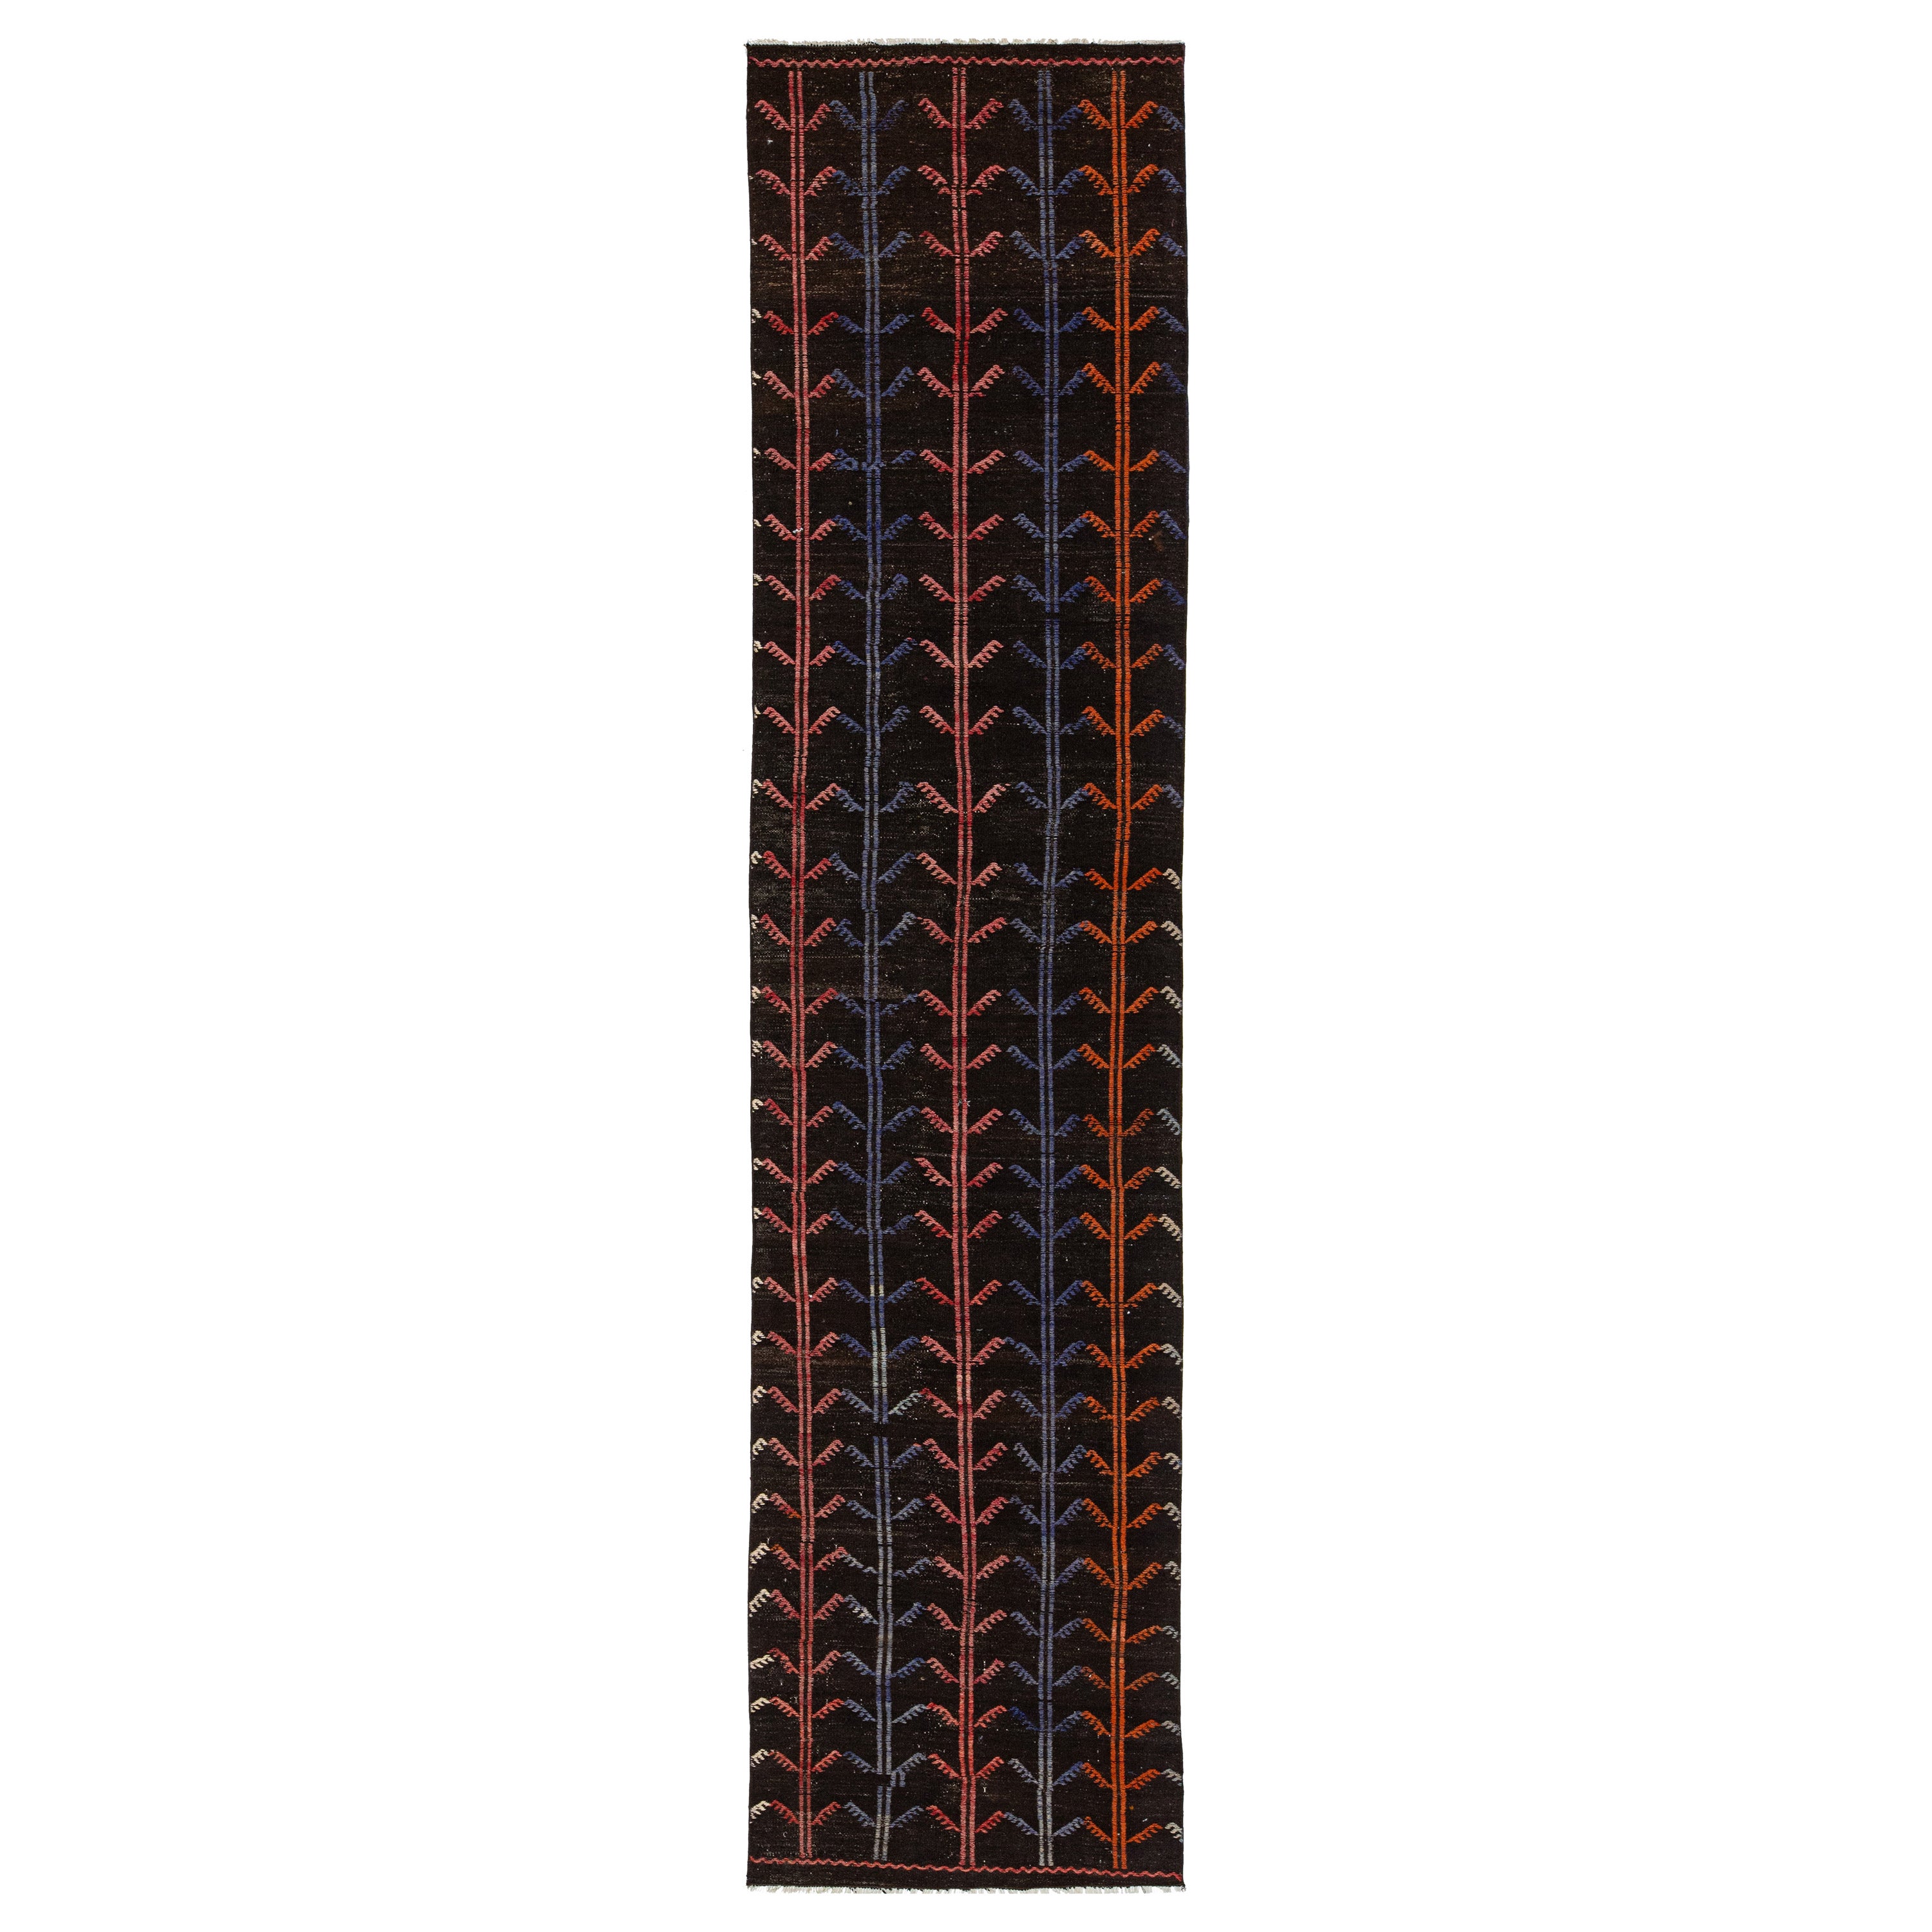 Vintage Turkish Kilim Wool Rug In Dark Brown With Allover Design